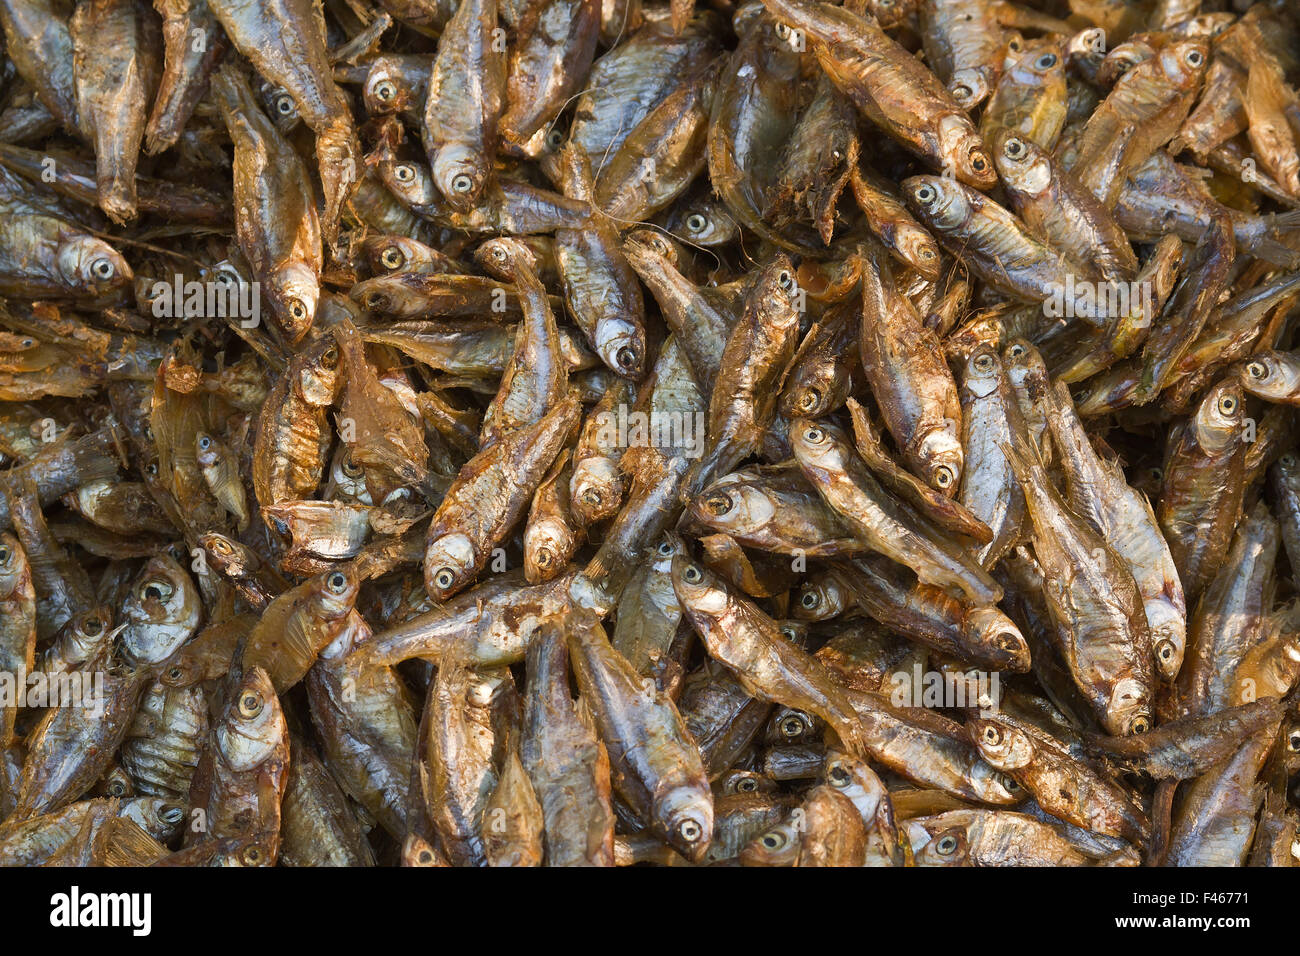 Dry fish in nepali market Stock Photo